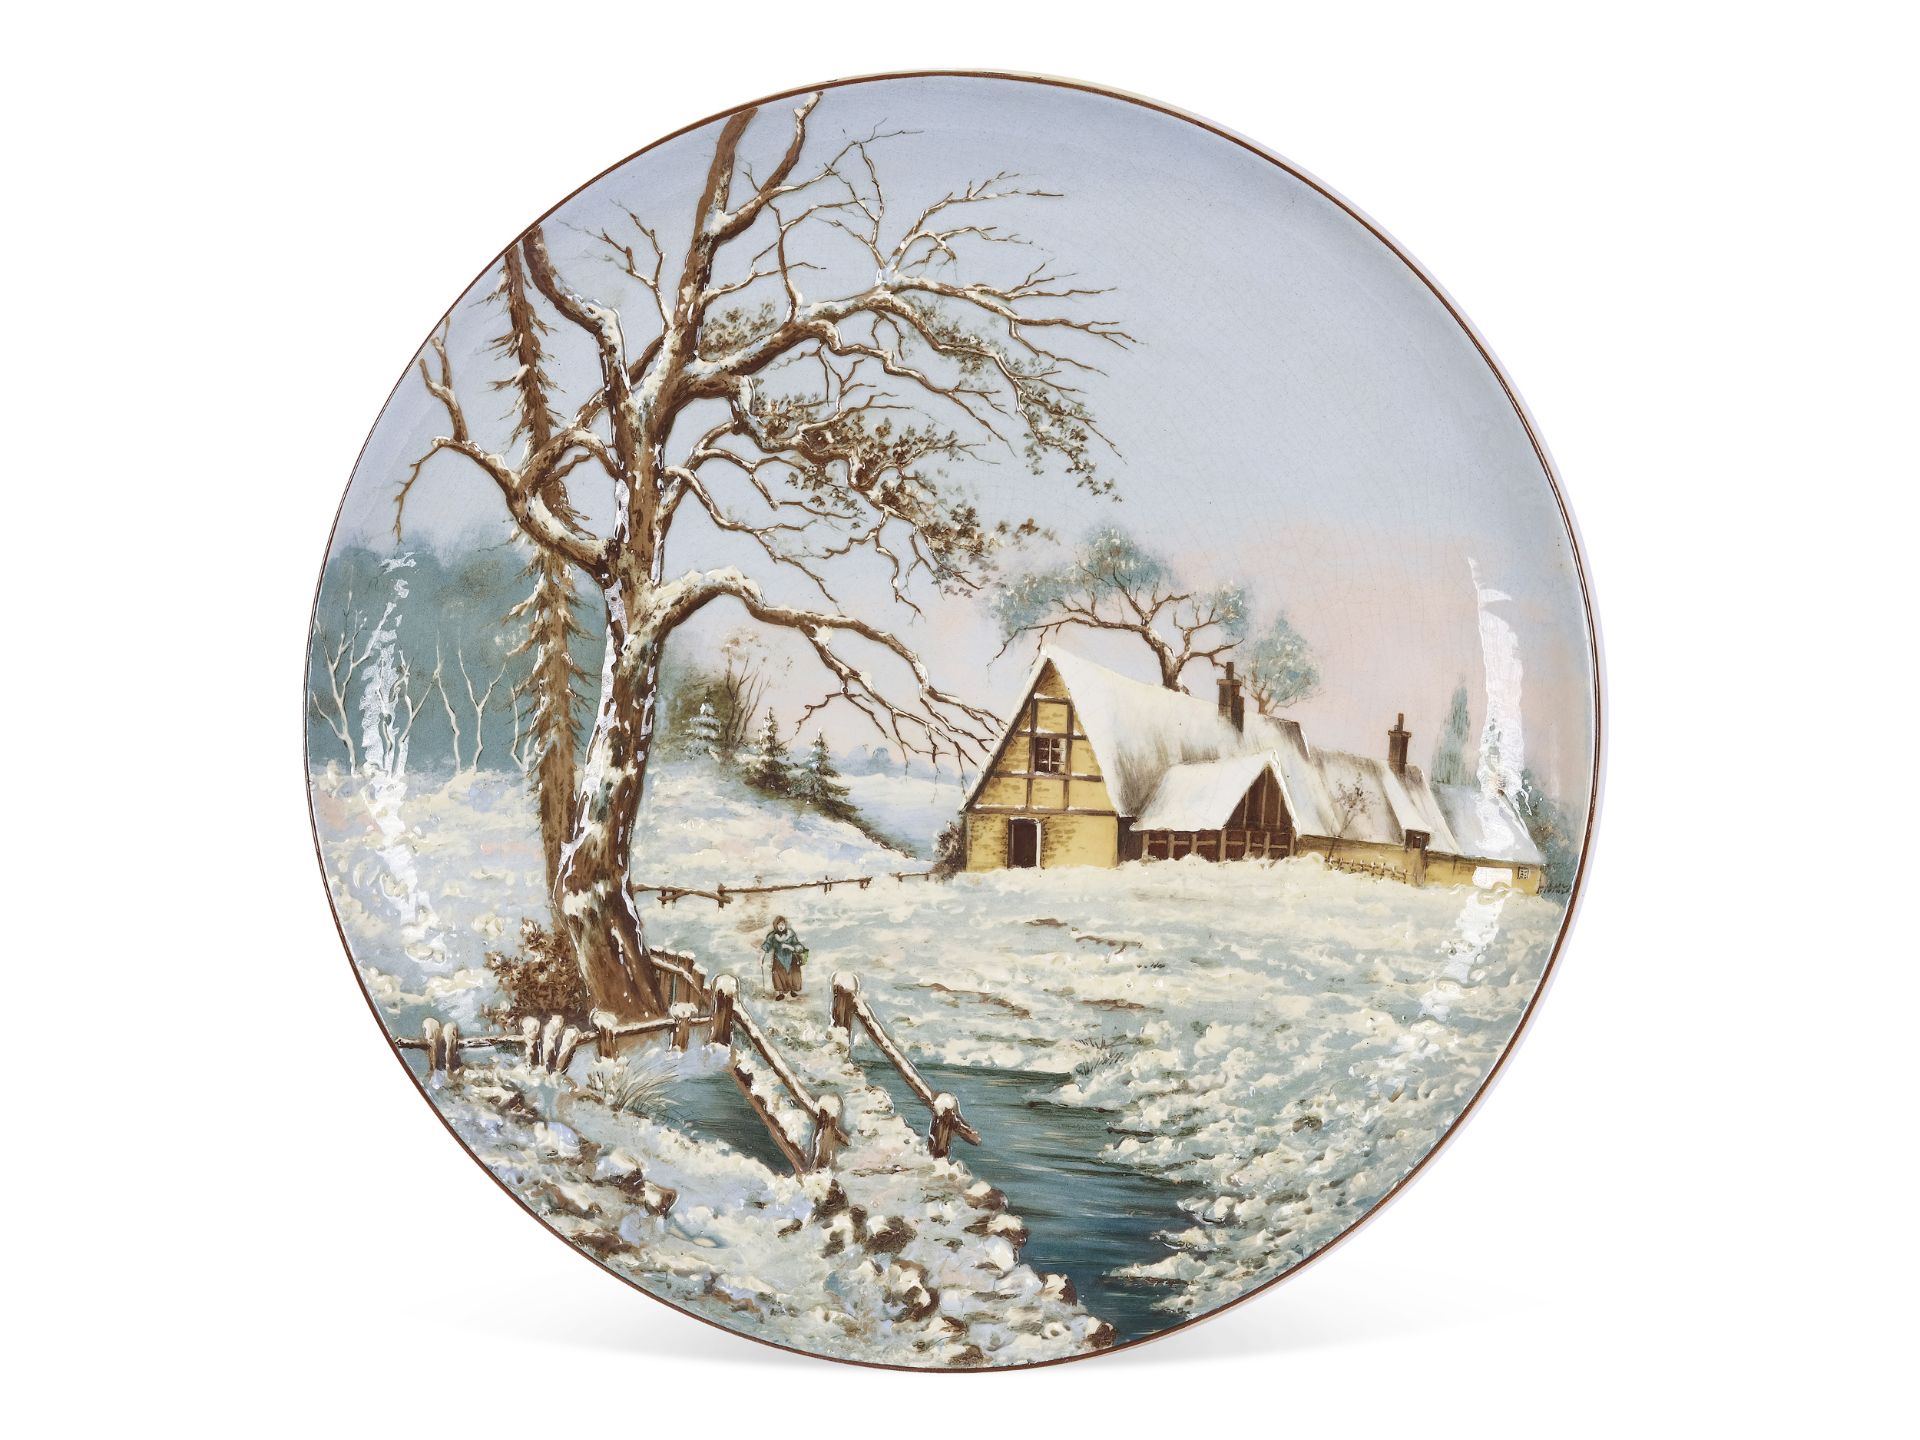 Large plate, relief depiction of a winter landscape